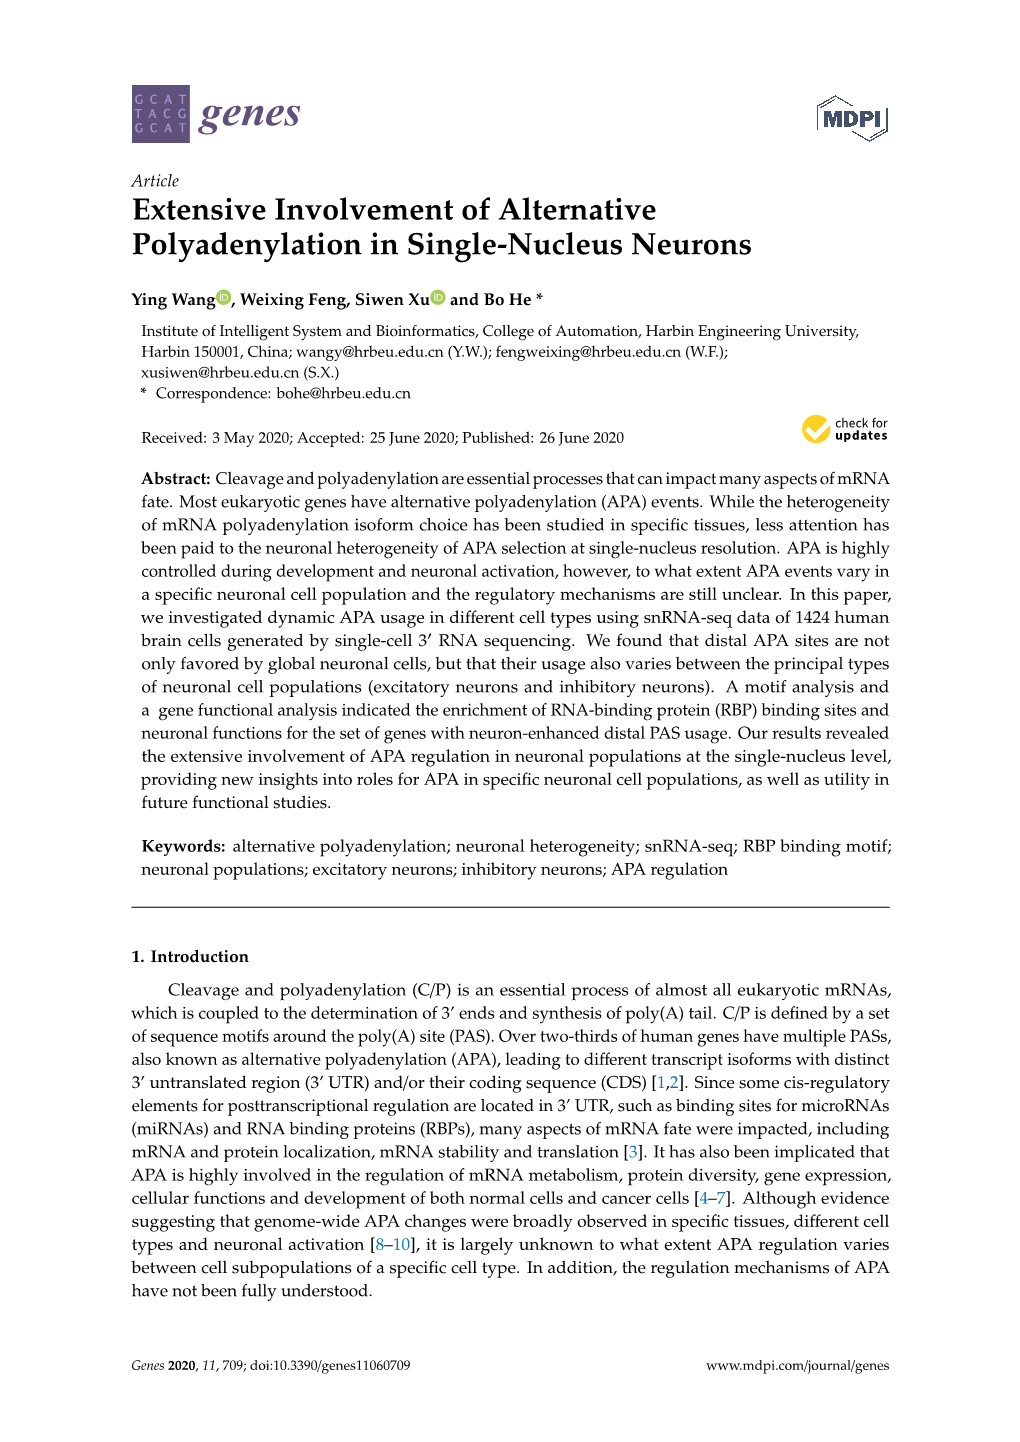 Extensive Involvement of Alternative Polyadenylation in Single-Nucleus Neurons